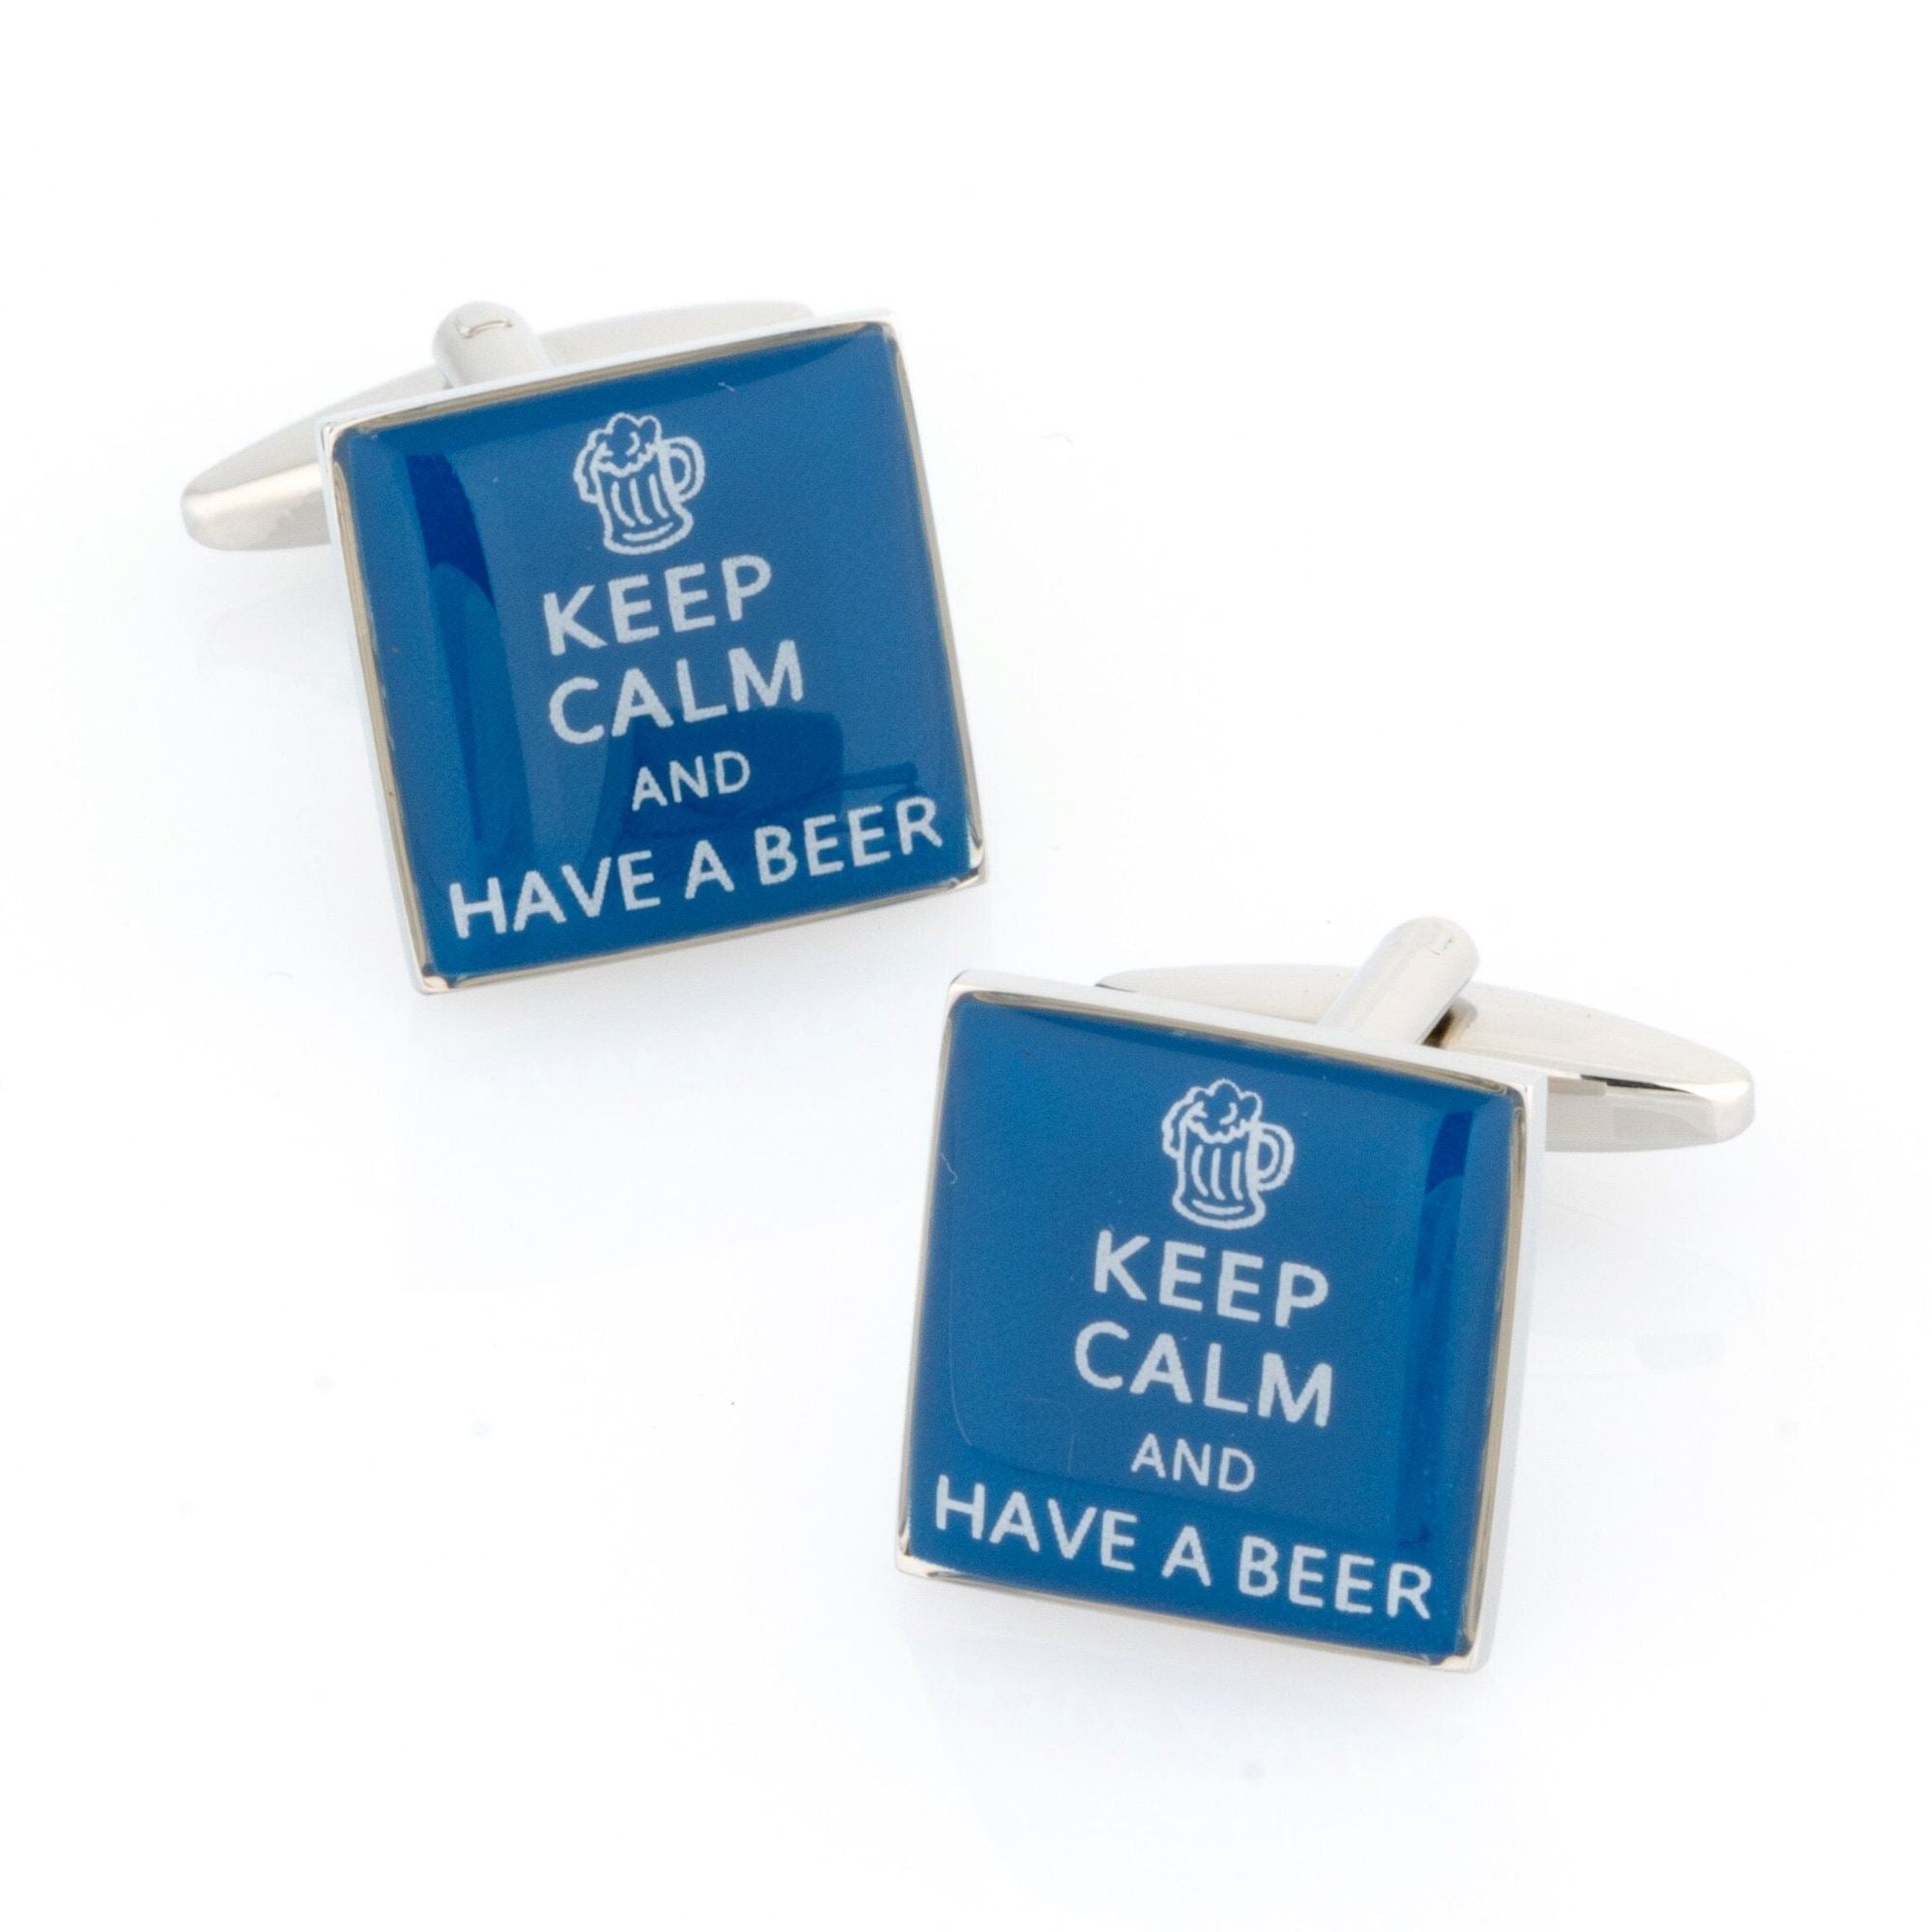 Keep Calm and Have a Beer Cufflinks Novelty Cufflinks Clinks Australia Keep Calm and Have a Beer Cufflinks 